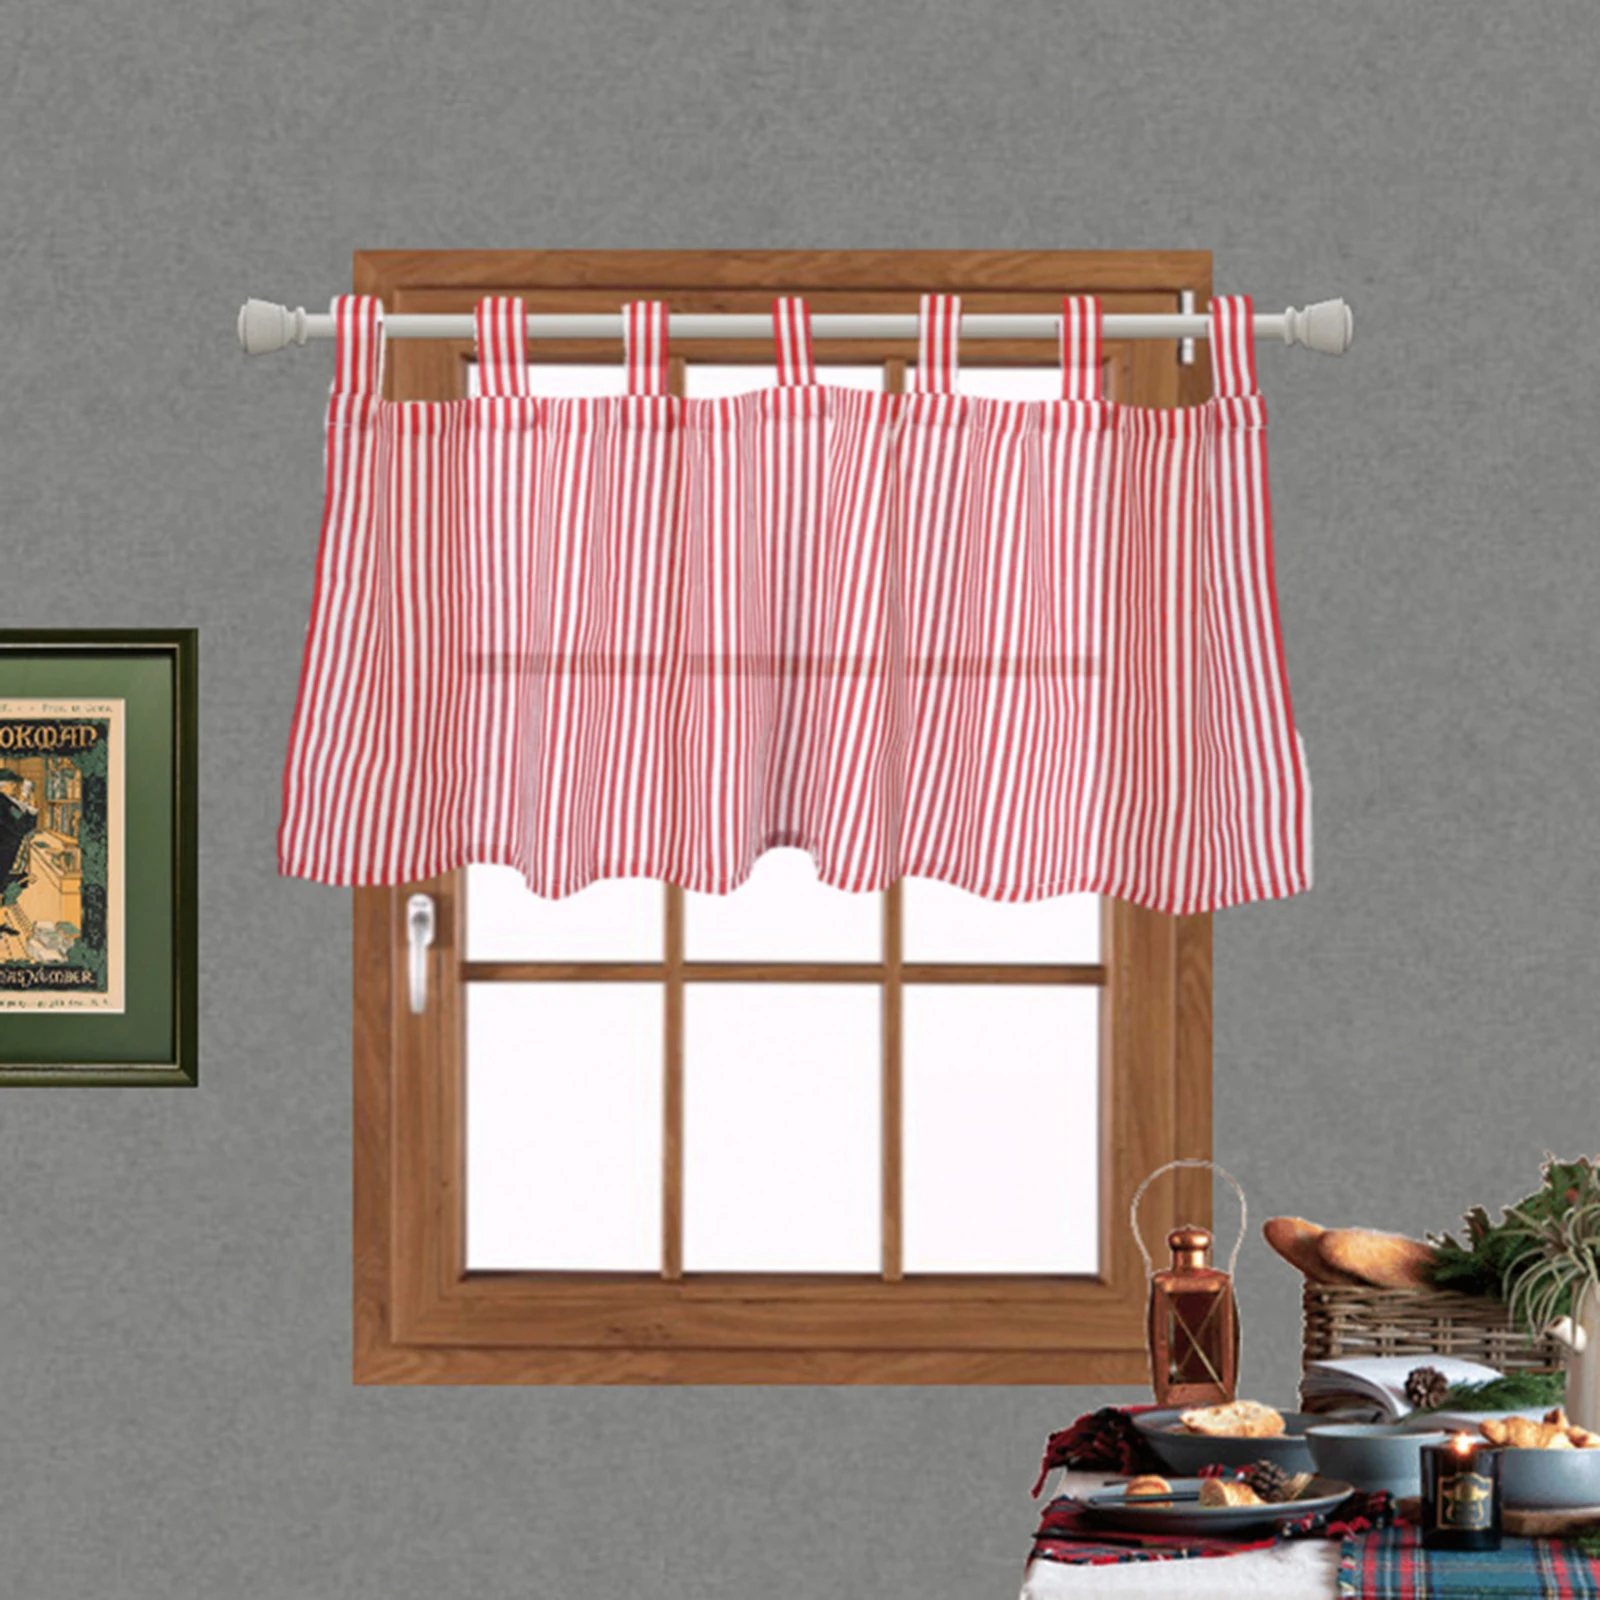 52x18 Inch Xmas Stripe Window Valance Grommet Short Curtain Textured Drapes Cotton Linen Bedroom Cabinet